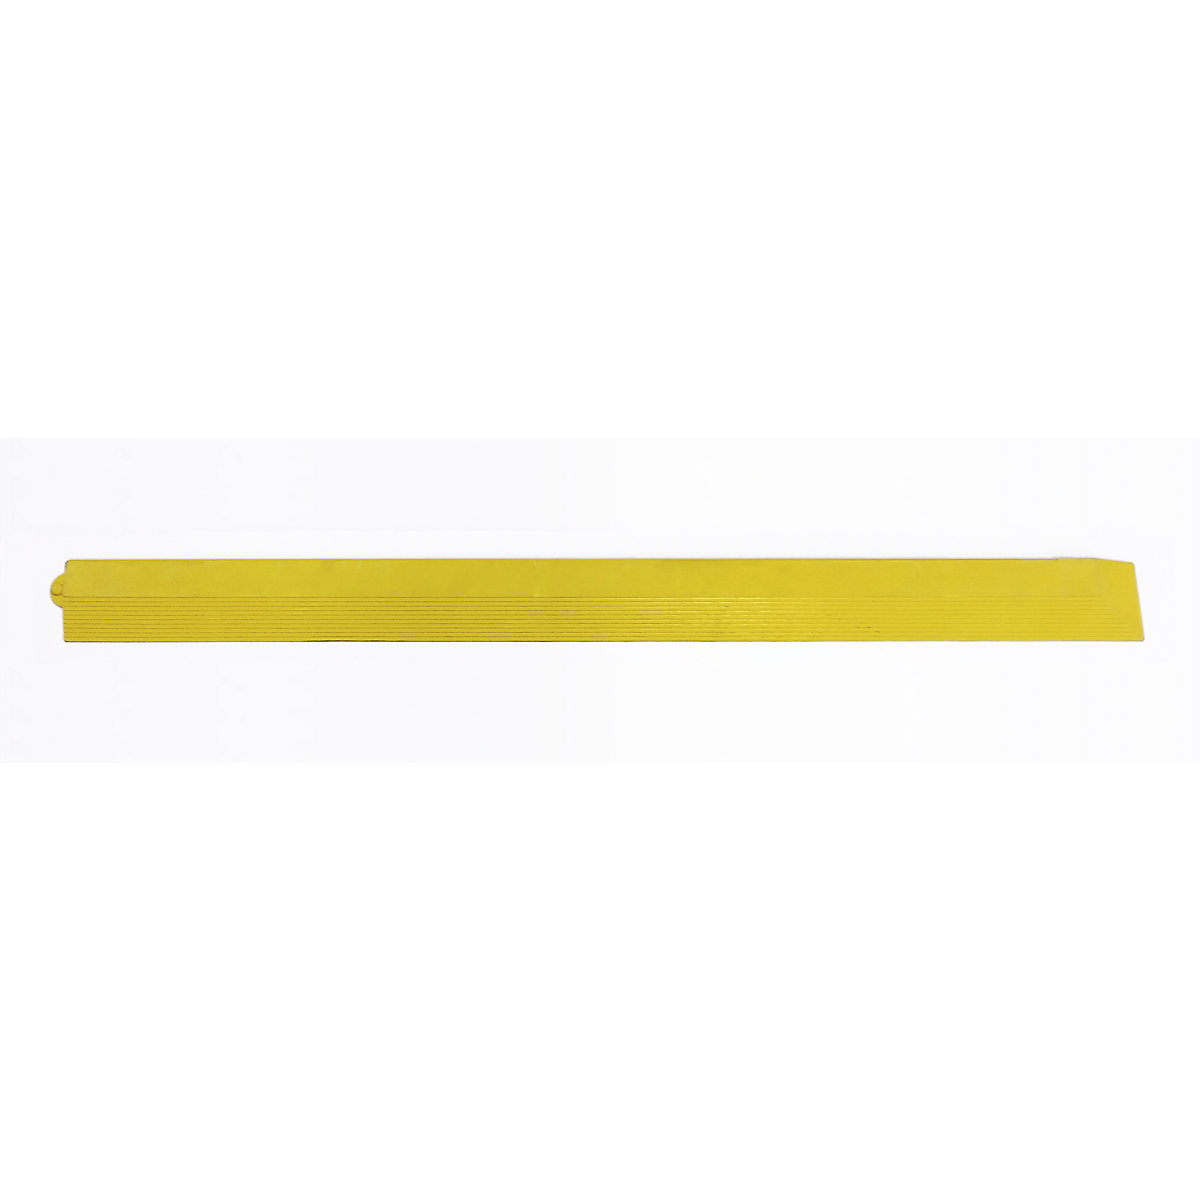 Listón de borde NBR/SP, L x A x H 965 x 65 x 17 mm, amarillo, incluida esquina, hembra